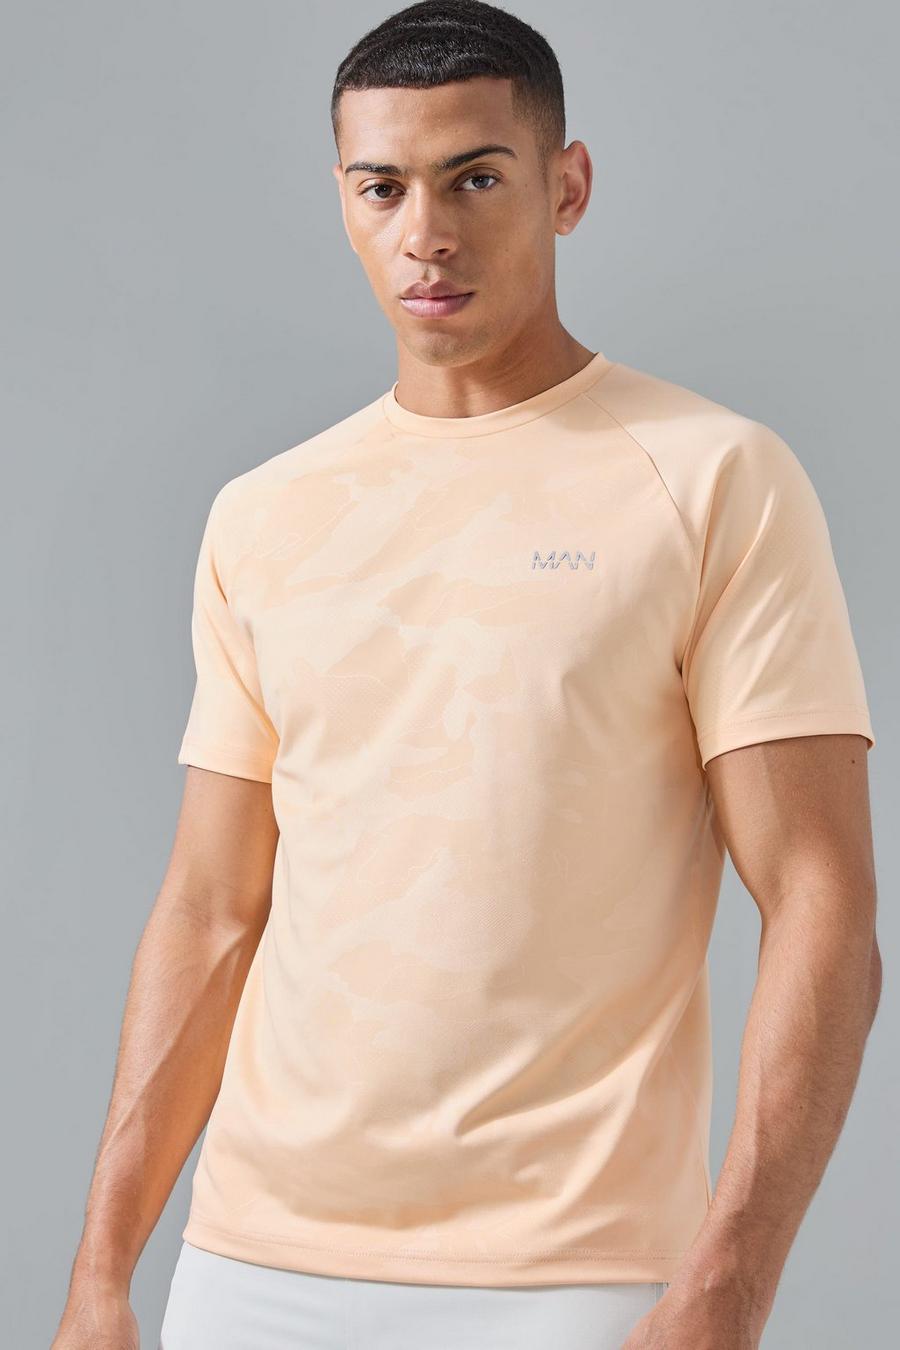 T-shirt Man Active per alta performance in fantasia militare con maniche raglan, Orange image number 1